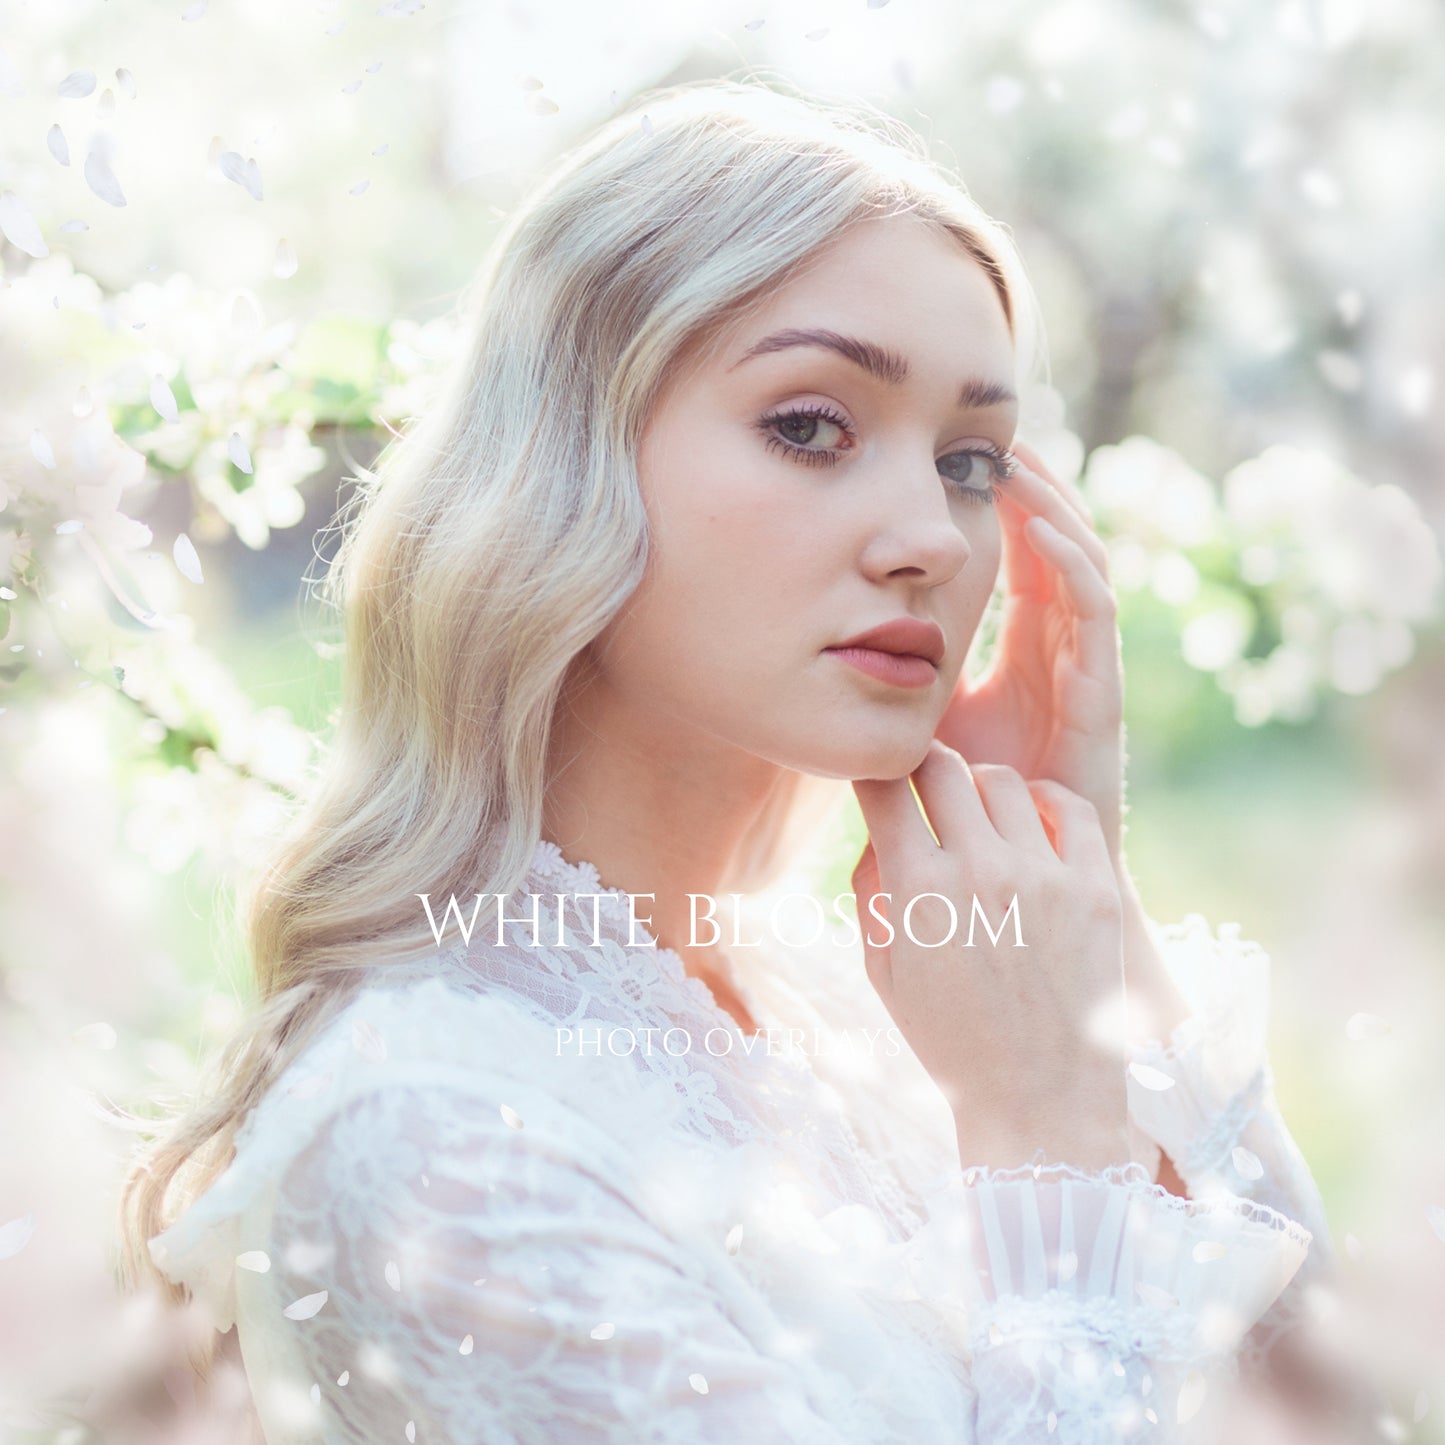 White Blossom Photo Overlays